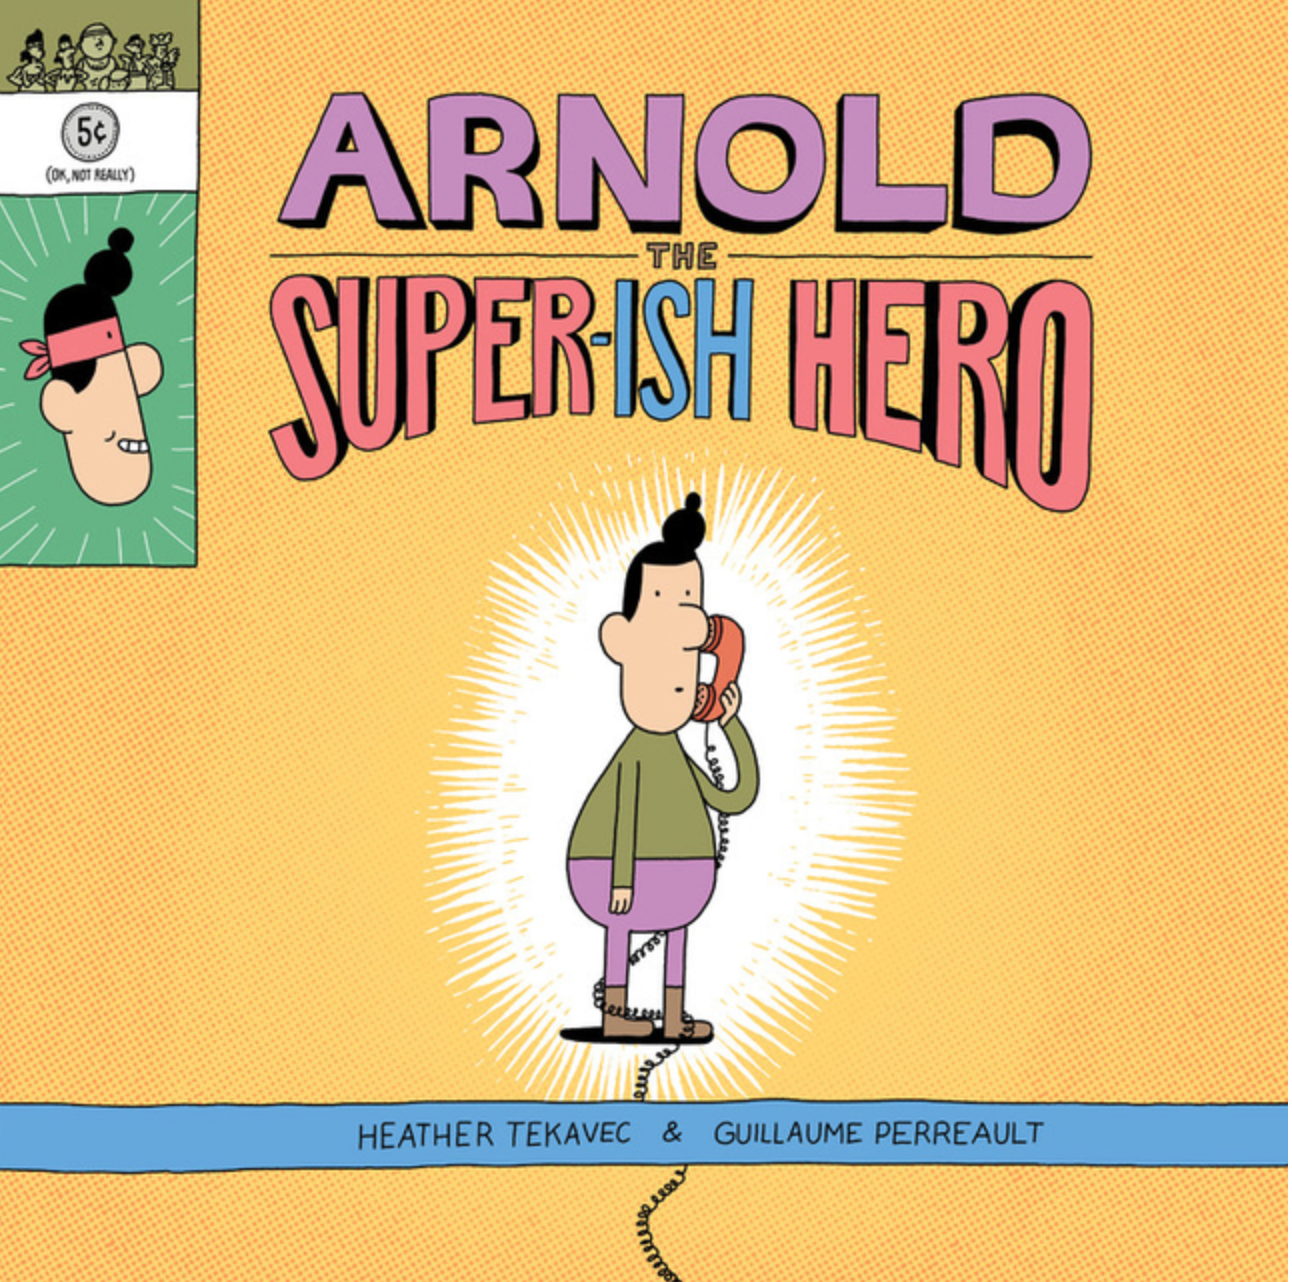 Arnold the Super-ish Hero